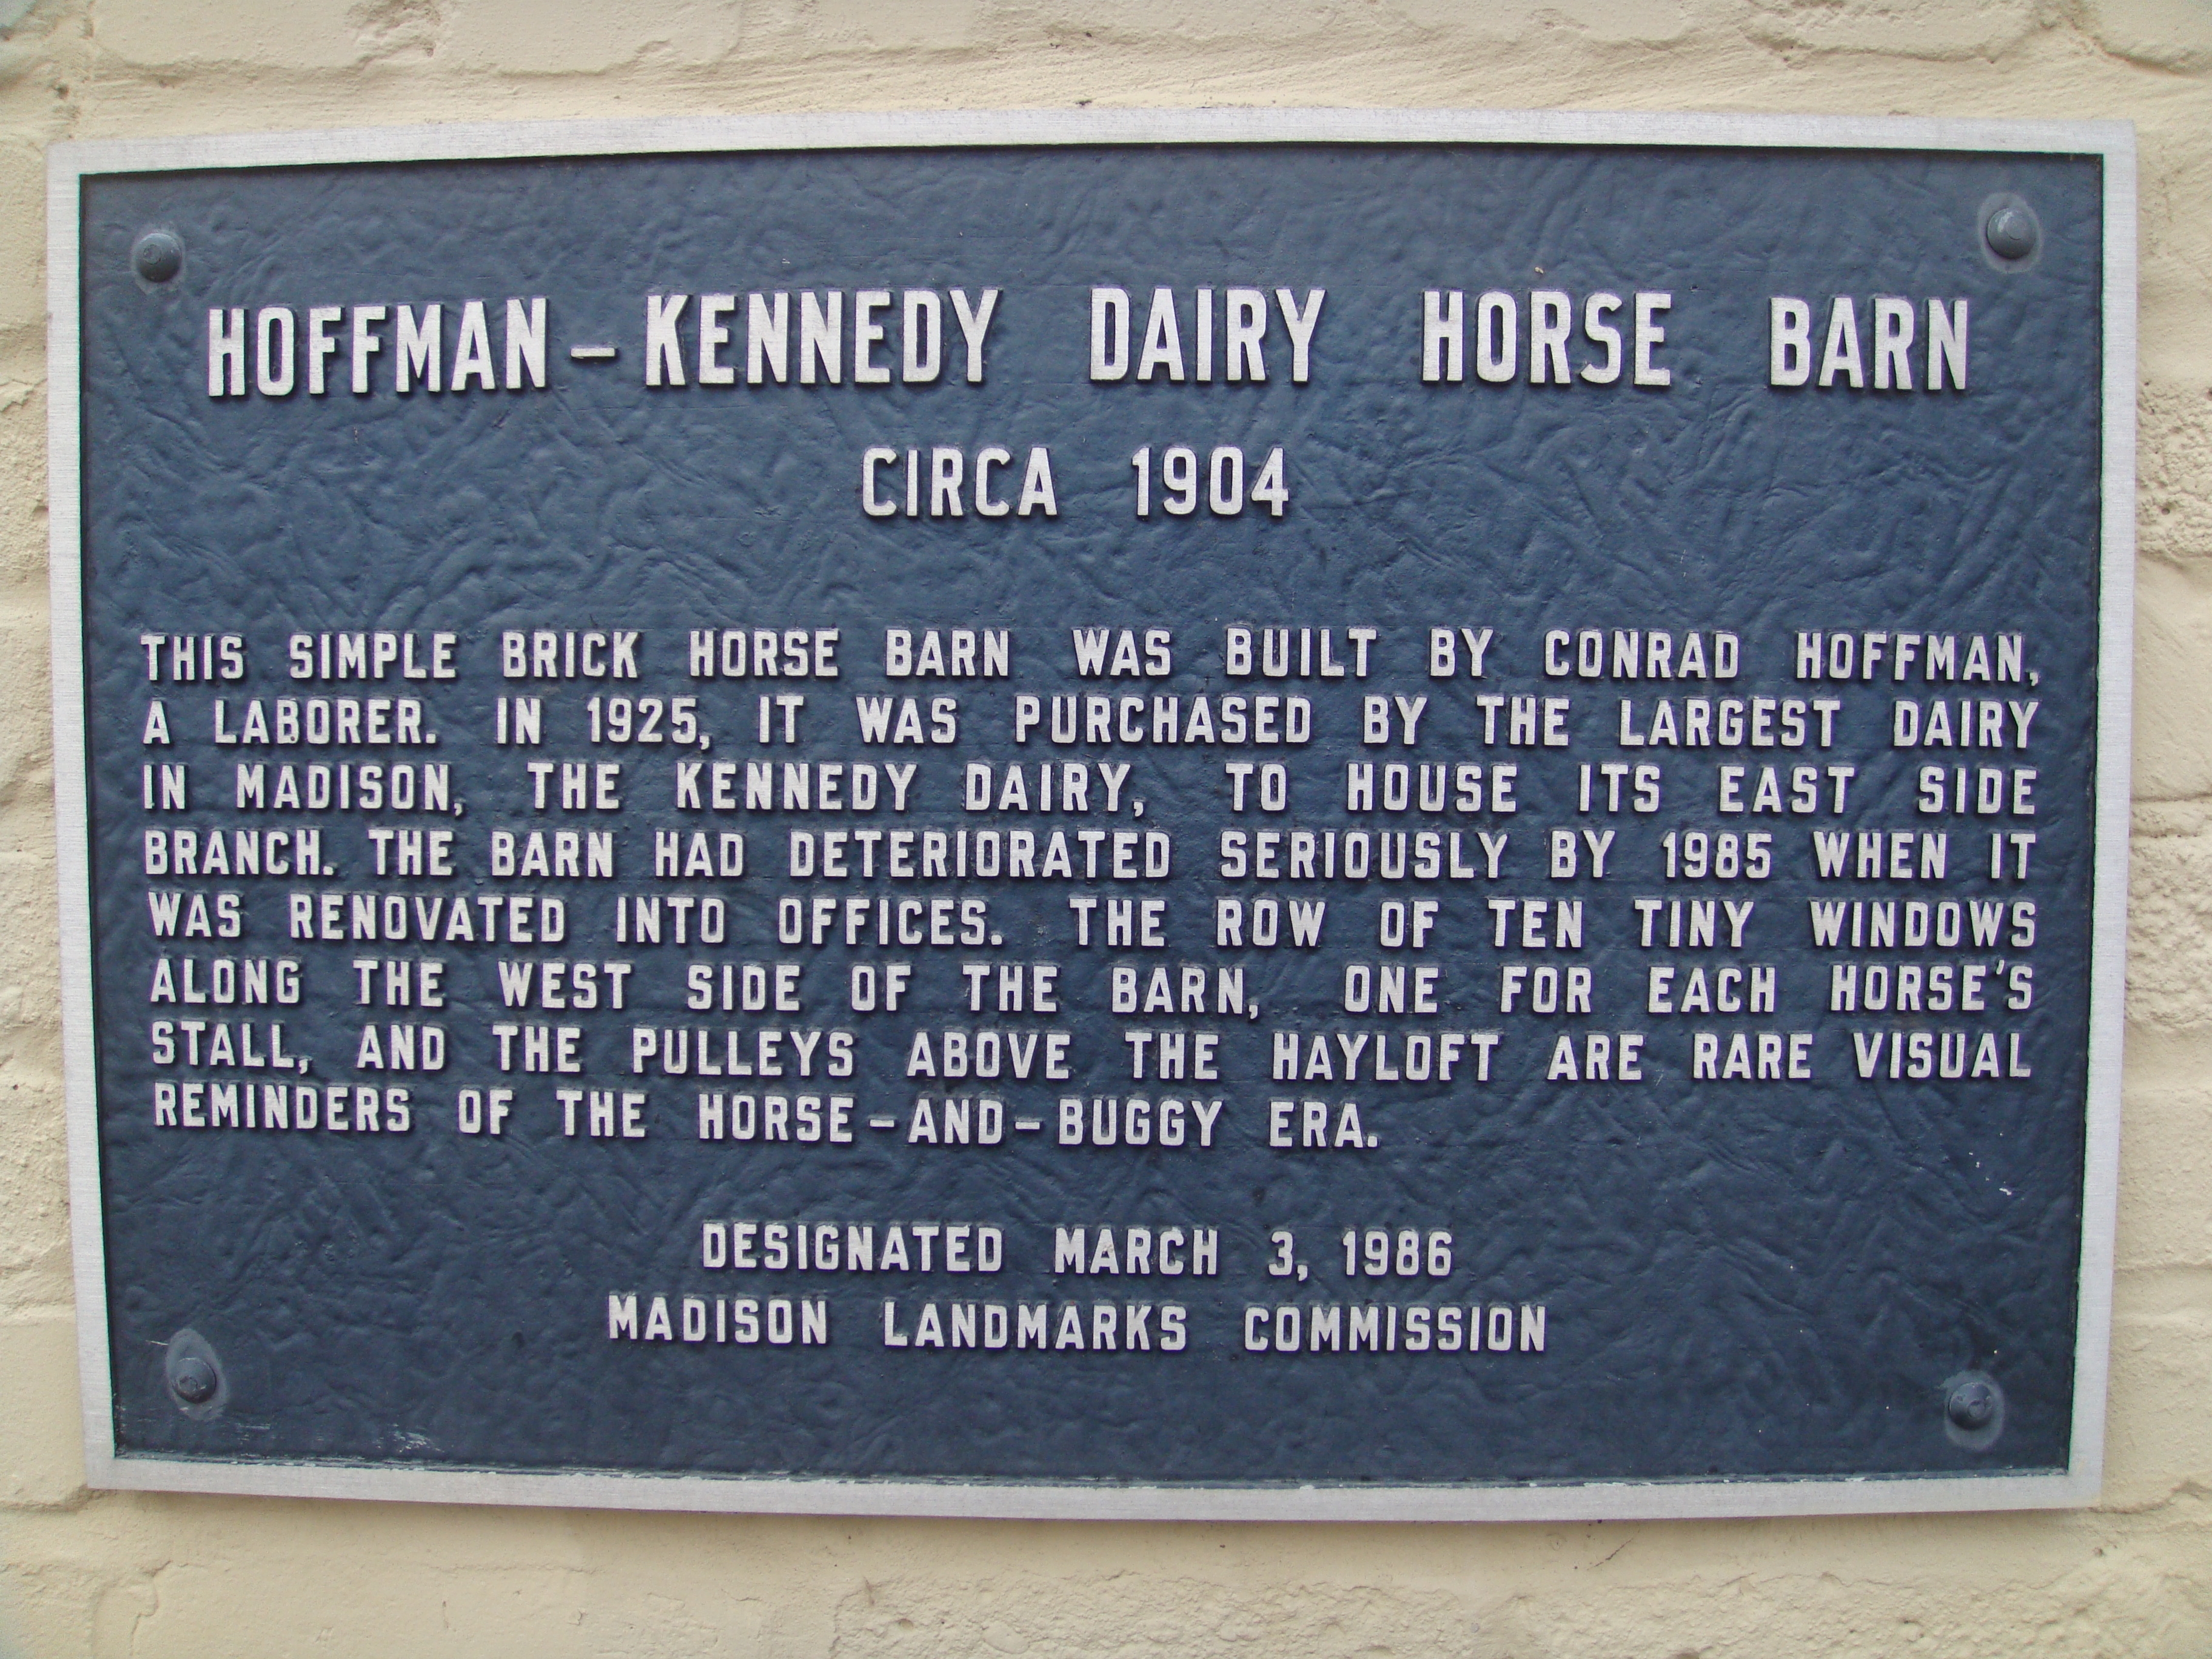 Hoffman - Kennedy Dairy Horse Barn Marker